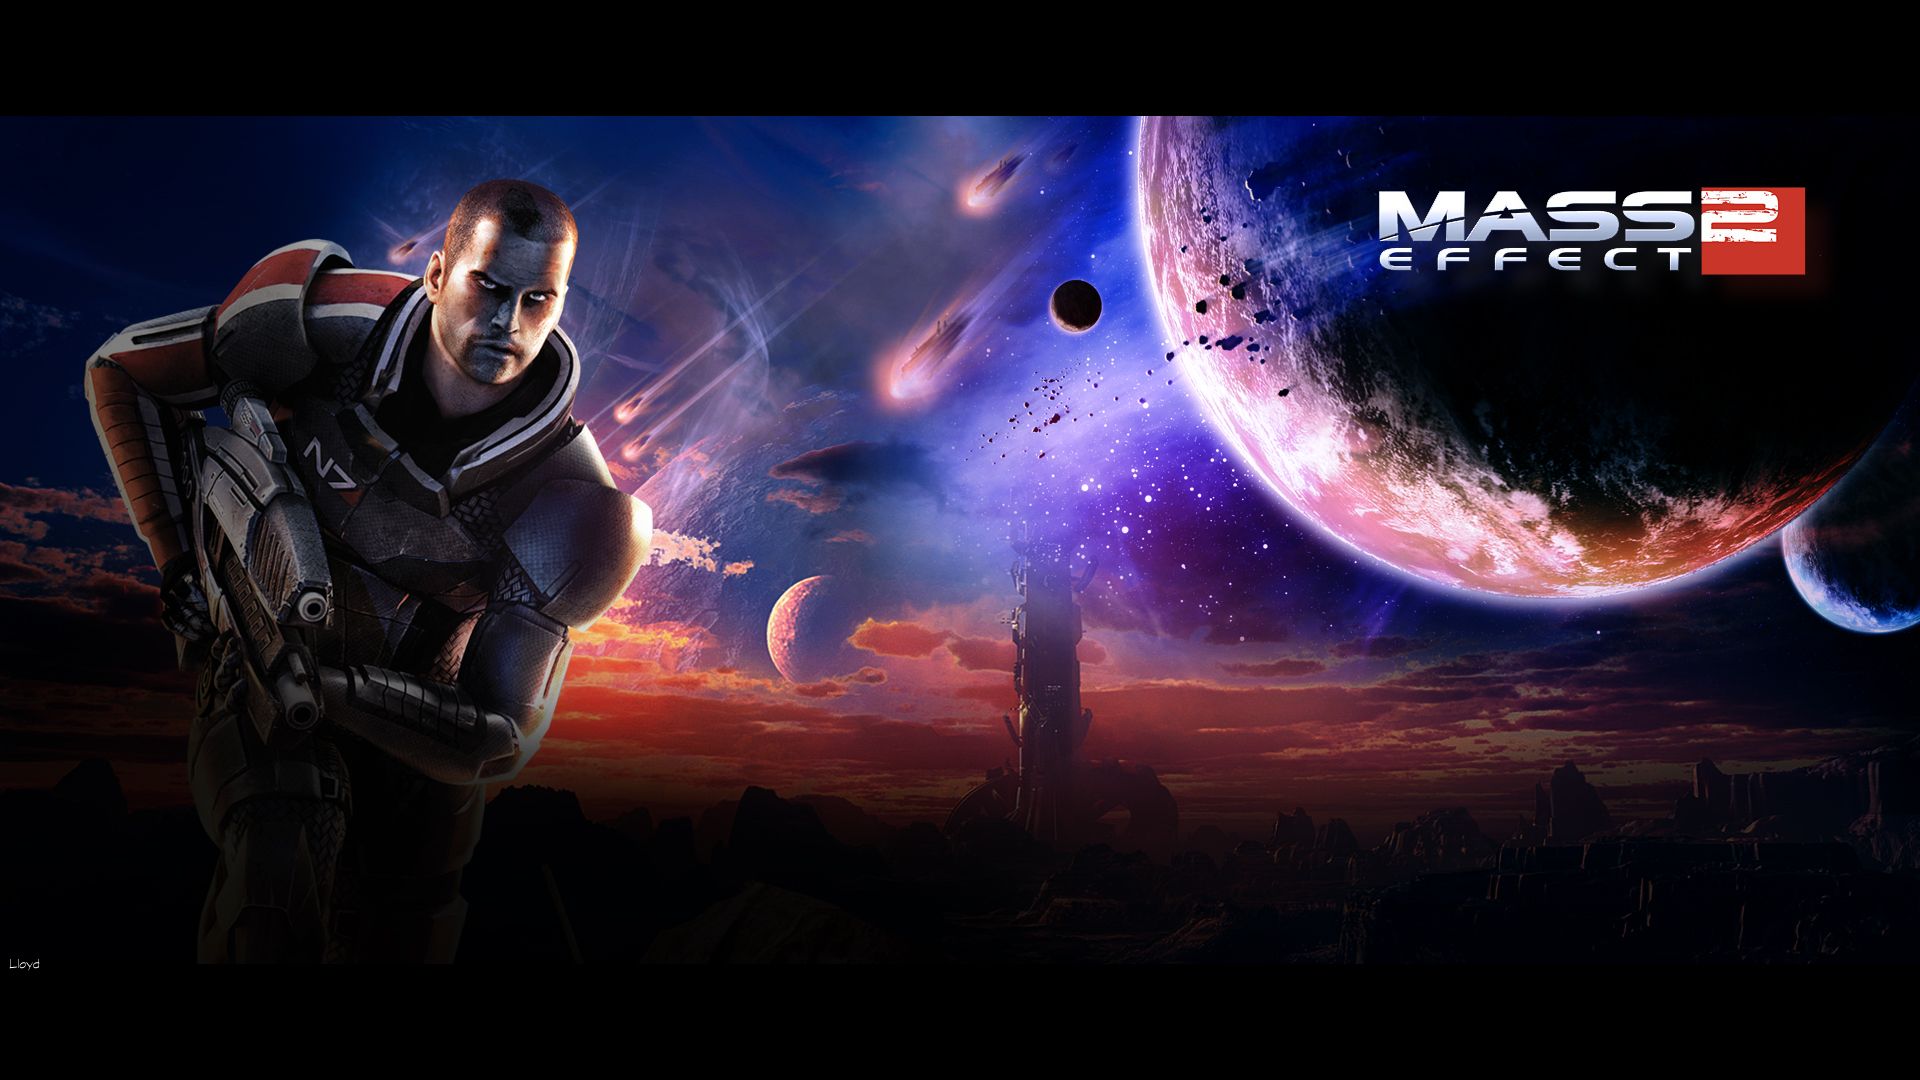 Mass Effect HD Wallpaper | 1920x1080 | ID:14910